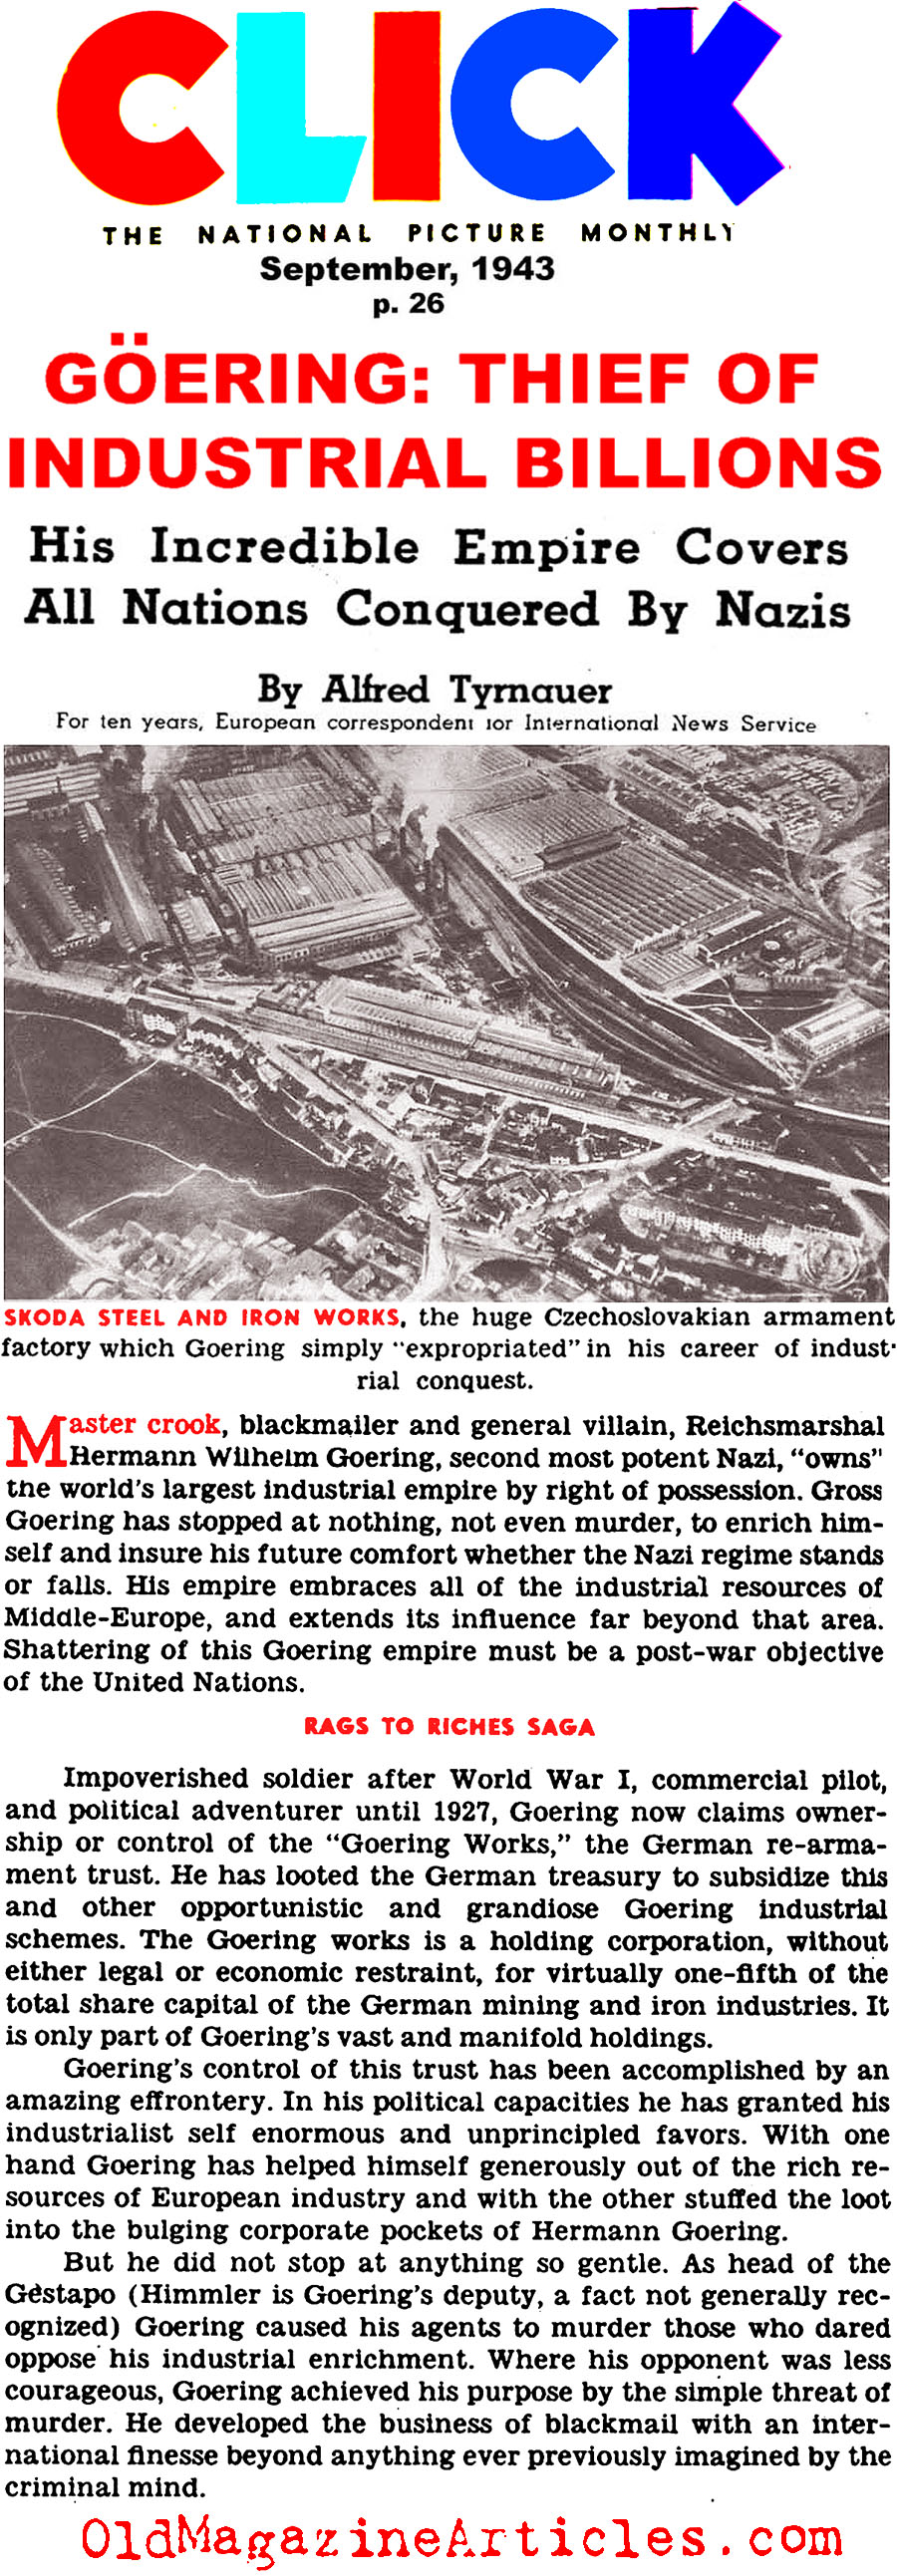 Hermann Goering: Power Hungry Graff Master (Click Magazine, 1943)